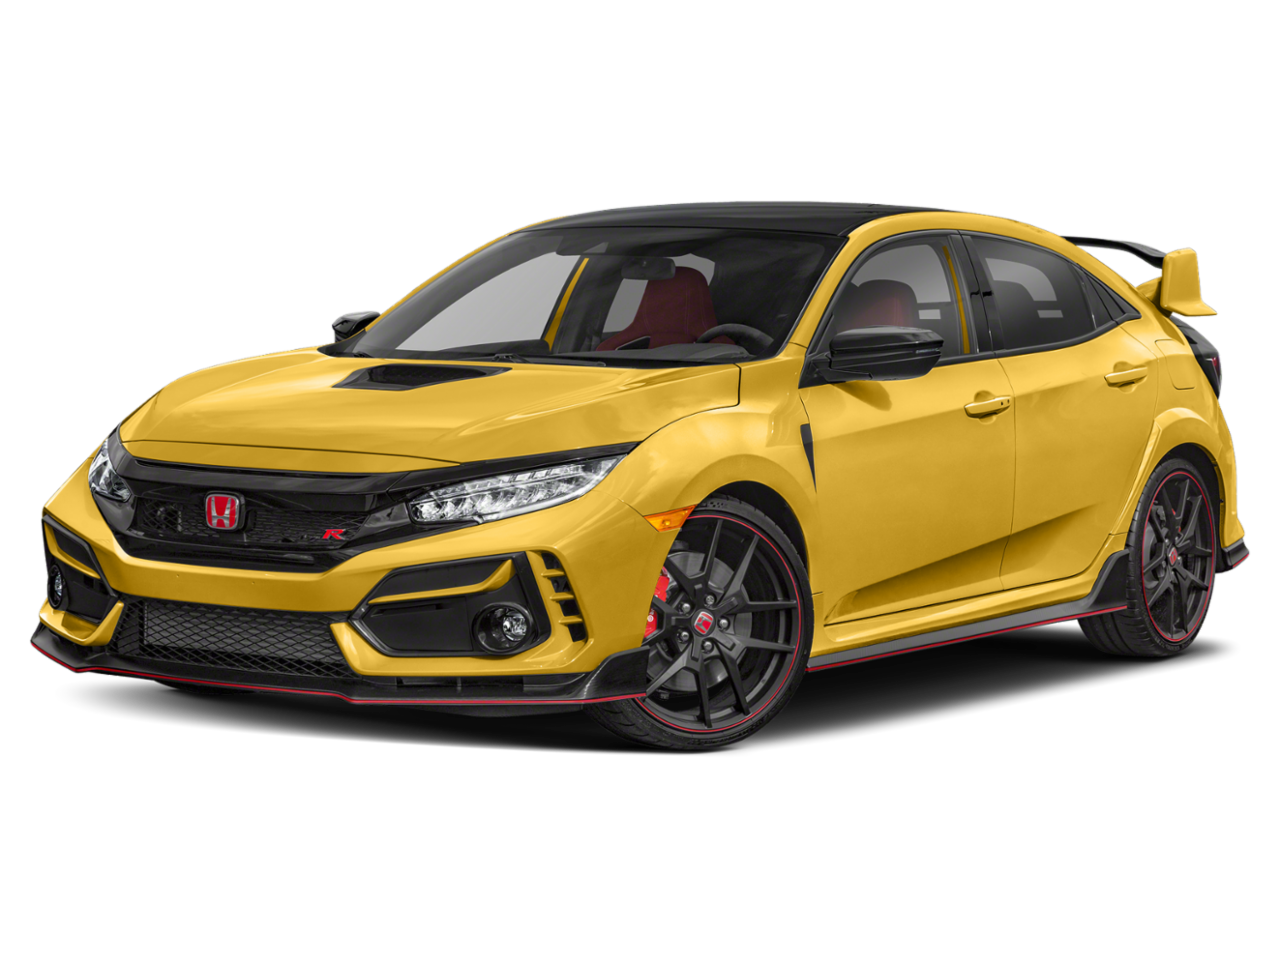 Honda 2021 Civic Type R Limited Edition